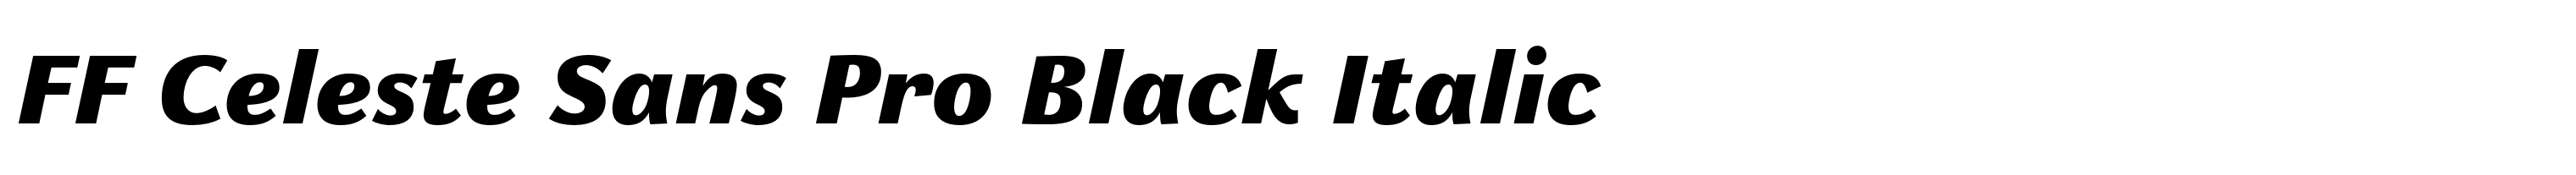 FF Celeste Sans Pro Black Italic